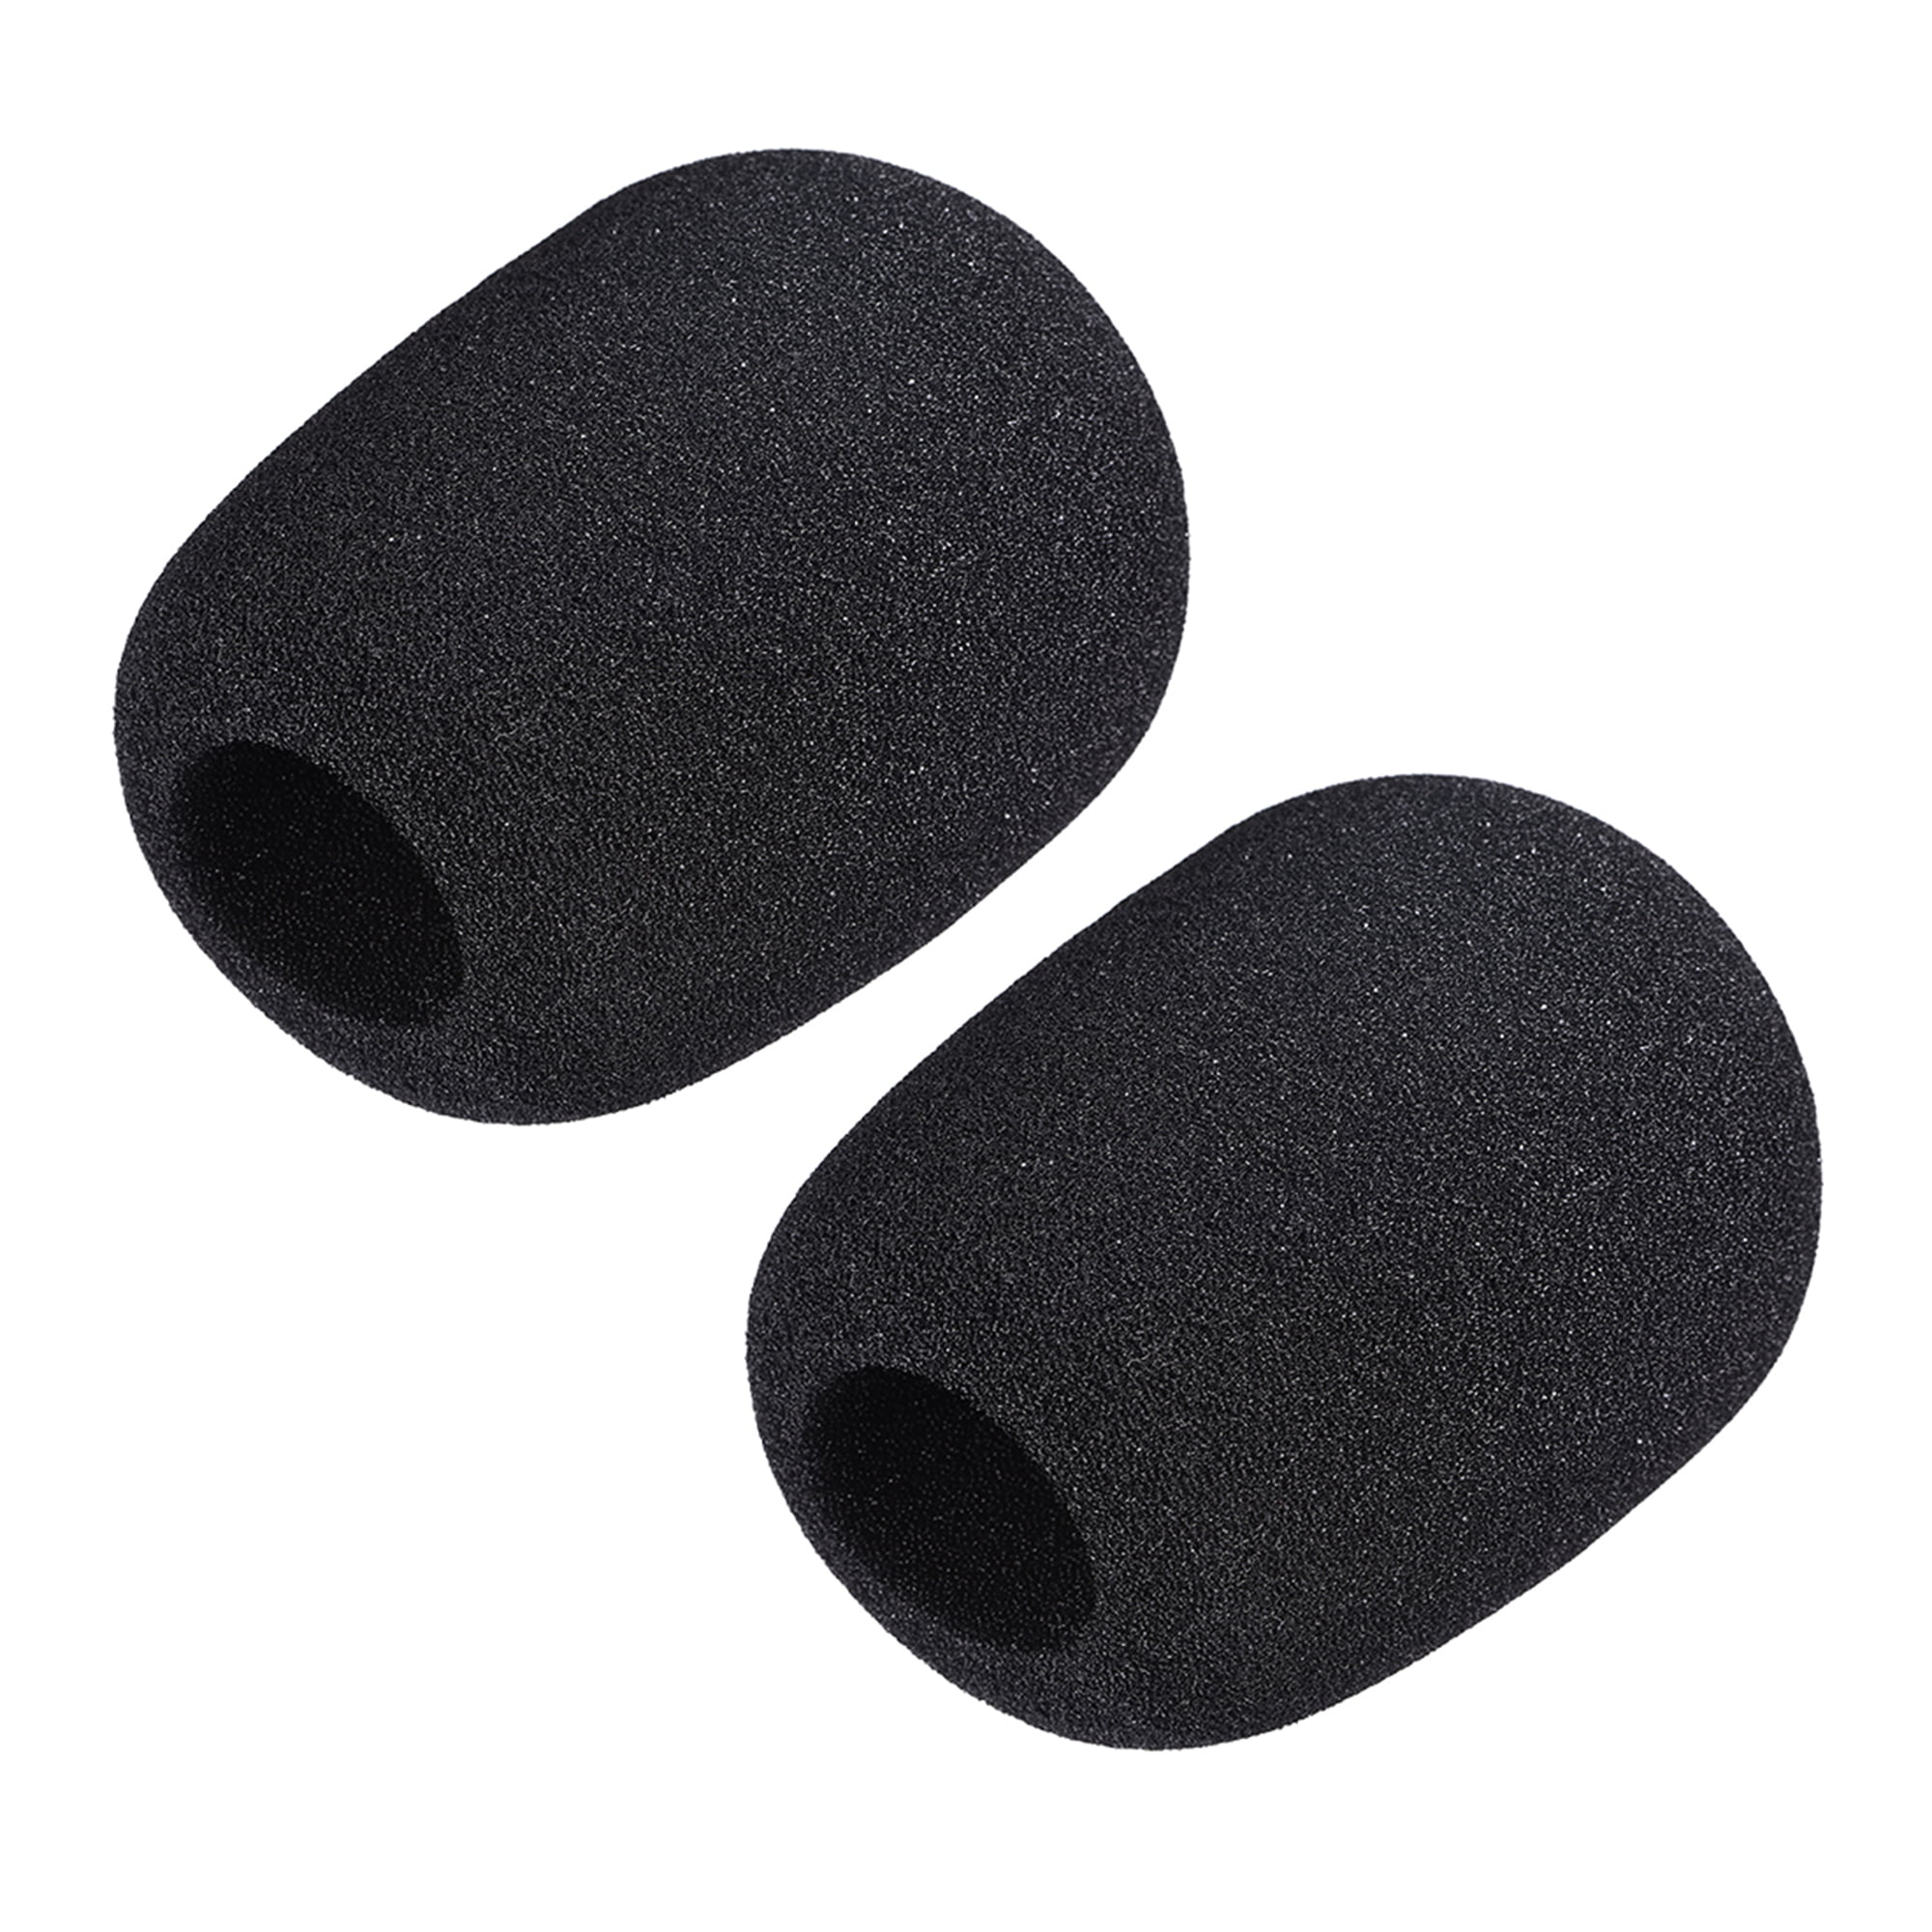 2 PCS Thicken Sponge Foam Mic Cover Handheld Microphone Windscreen Shield Protection Black 117mm